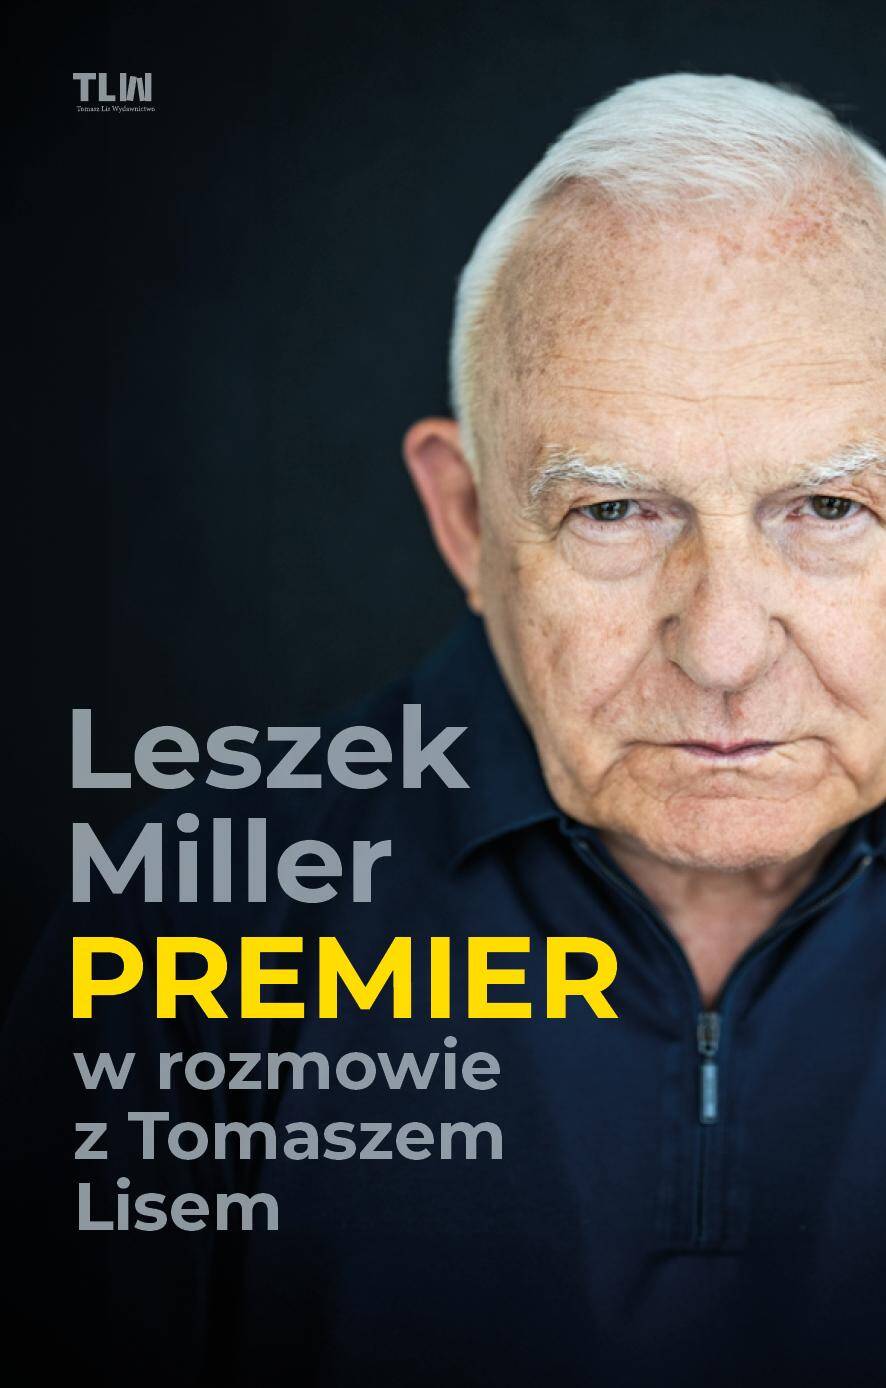 Premier Leszek Miller